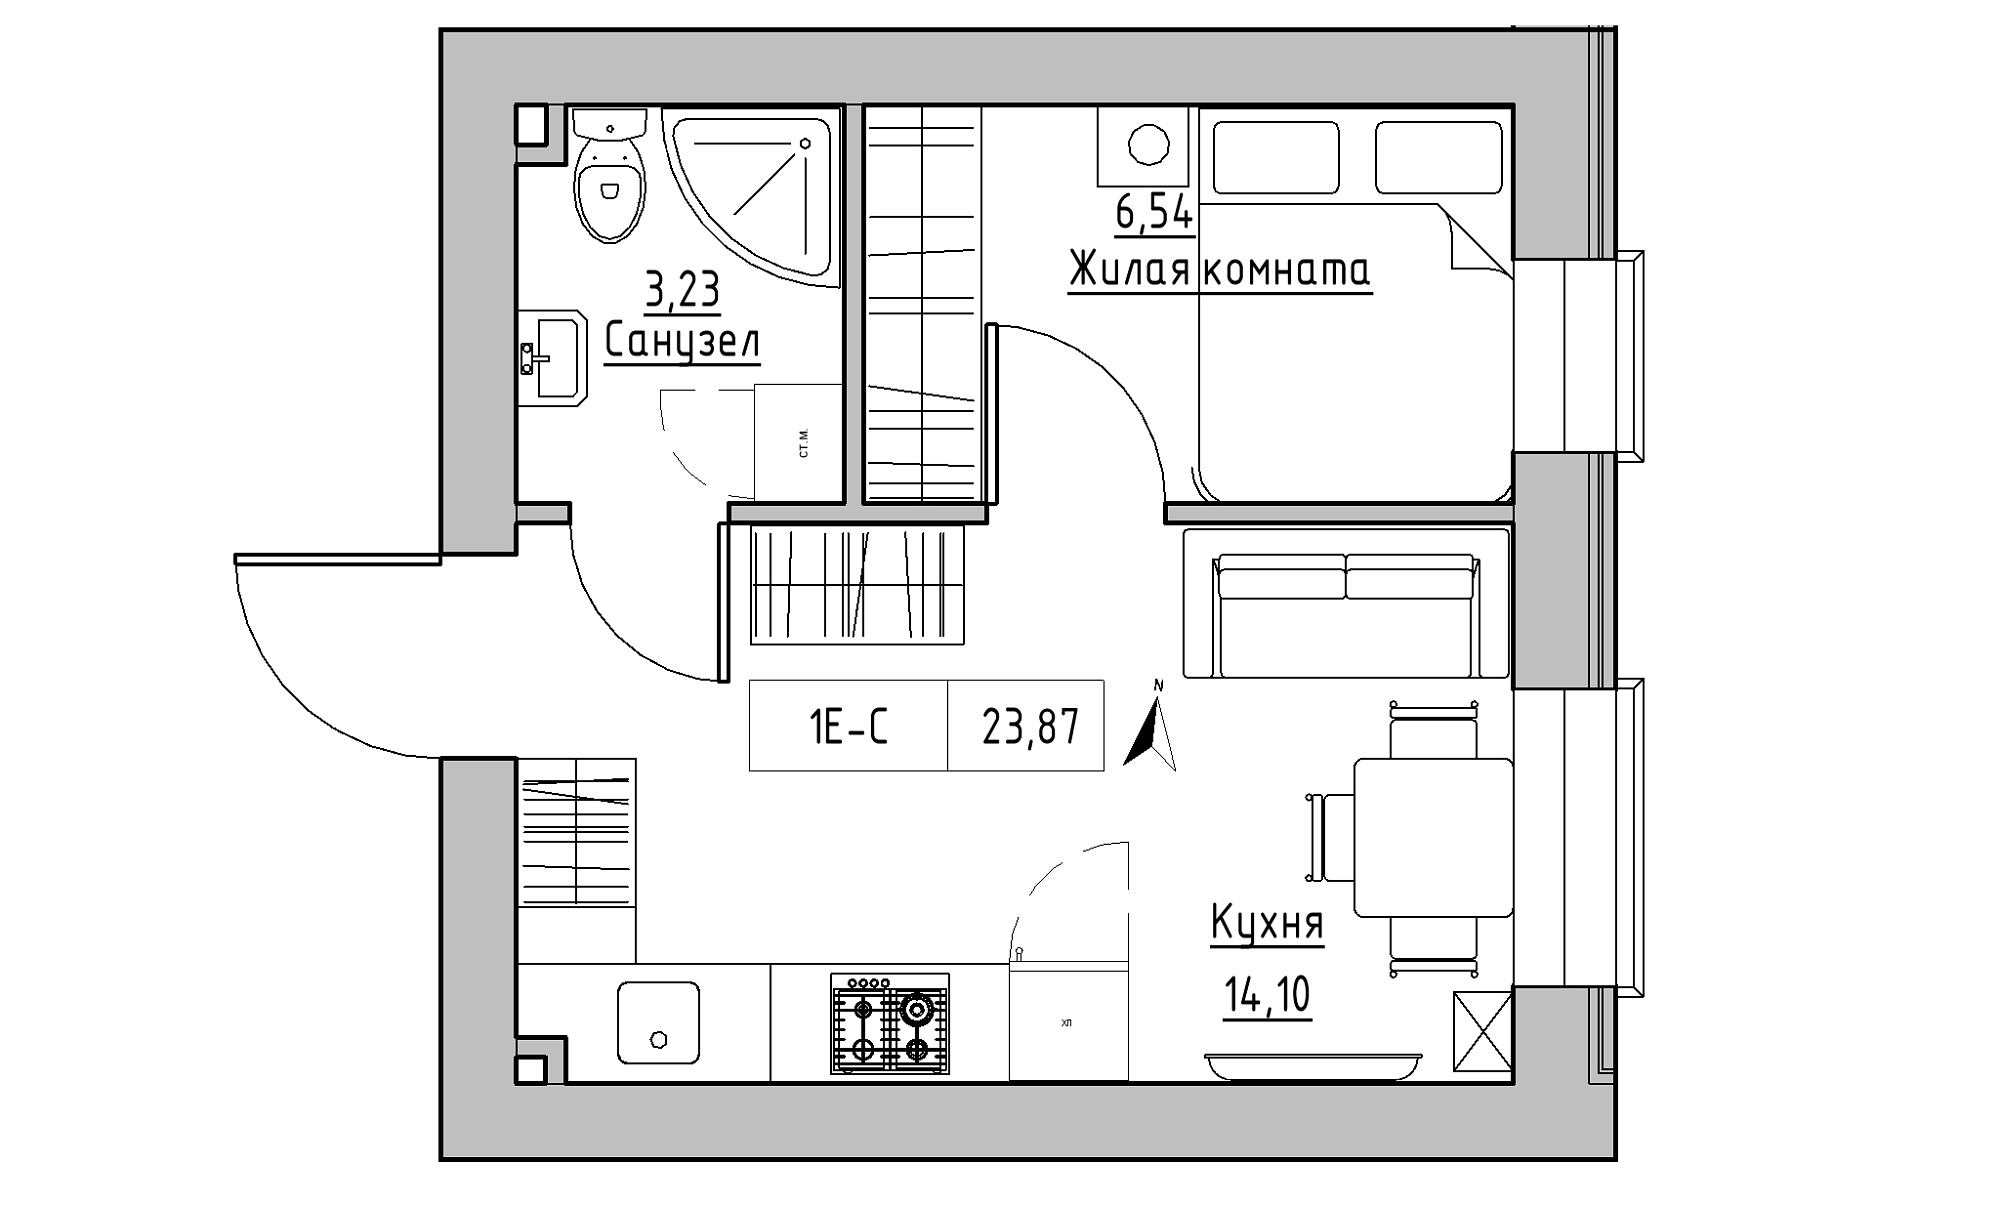 Planning 1-rm flats area 23.87m2, KS-023-03/0004.